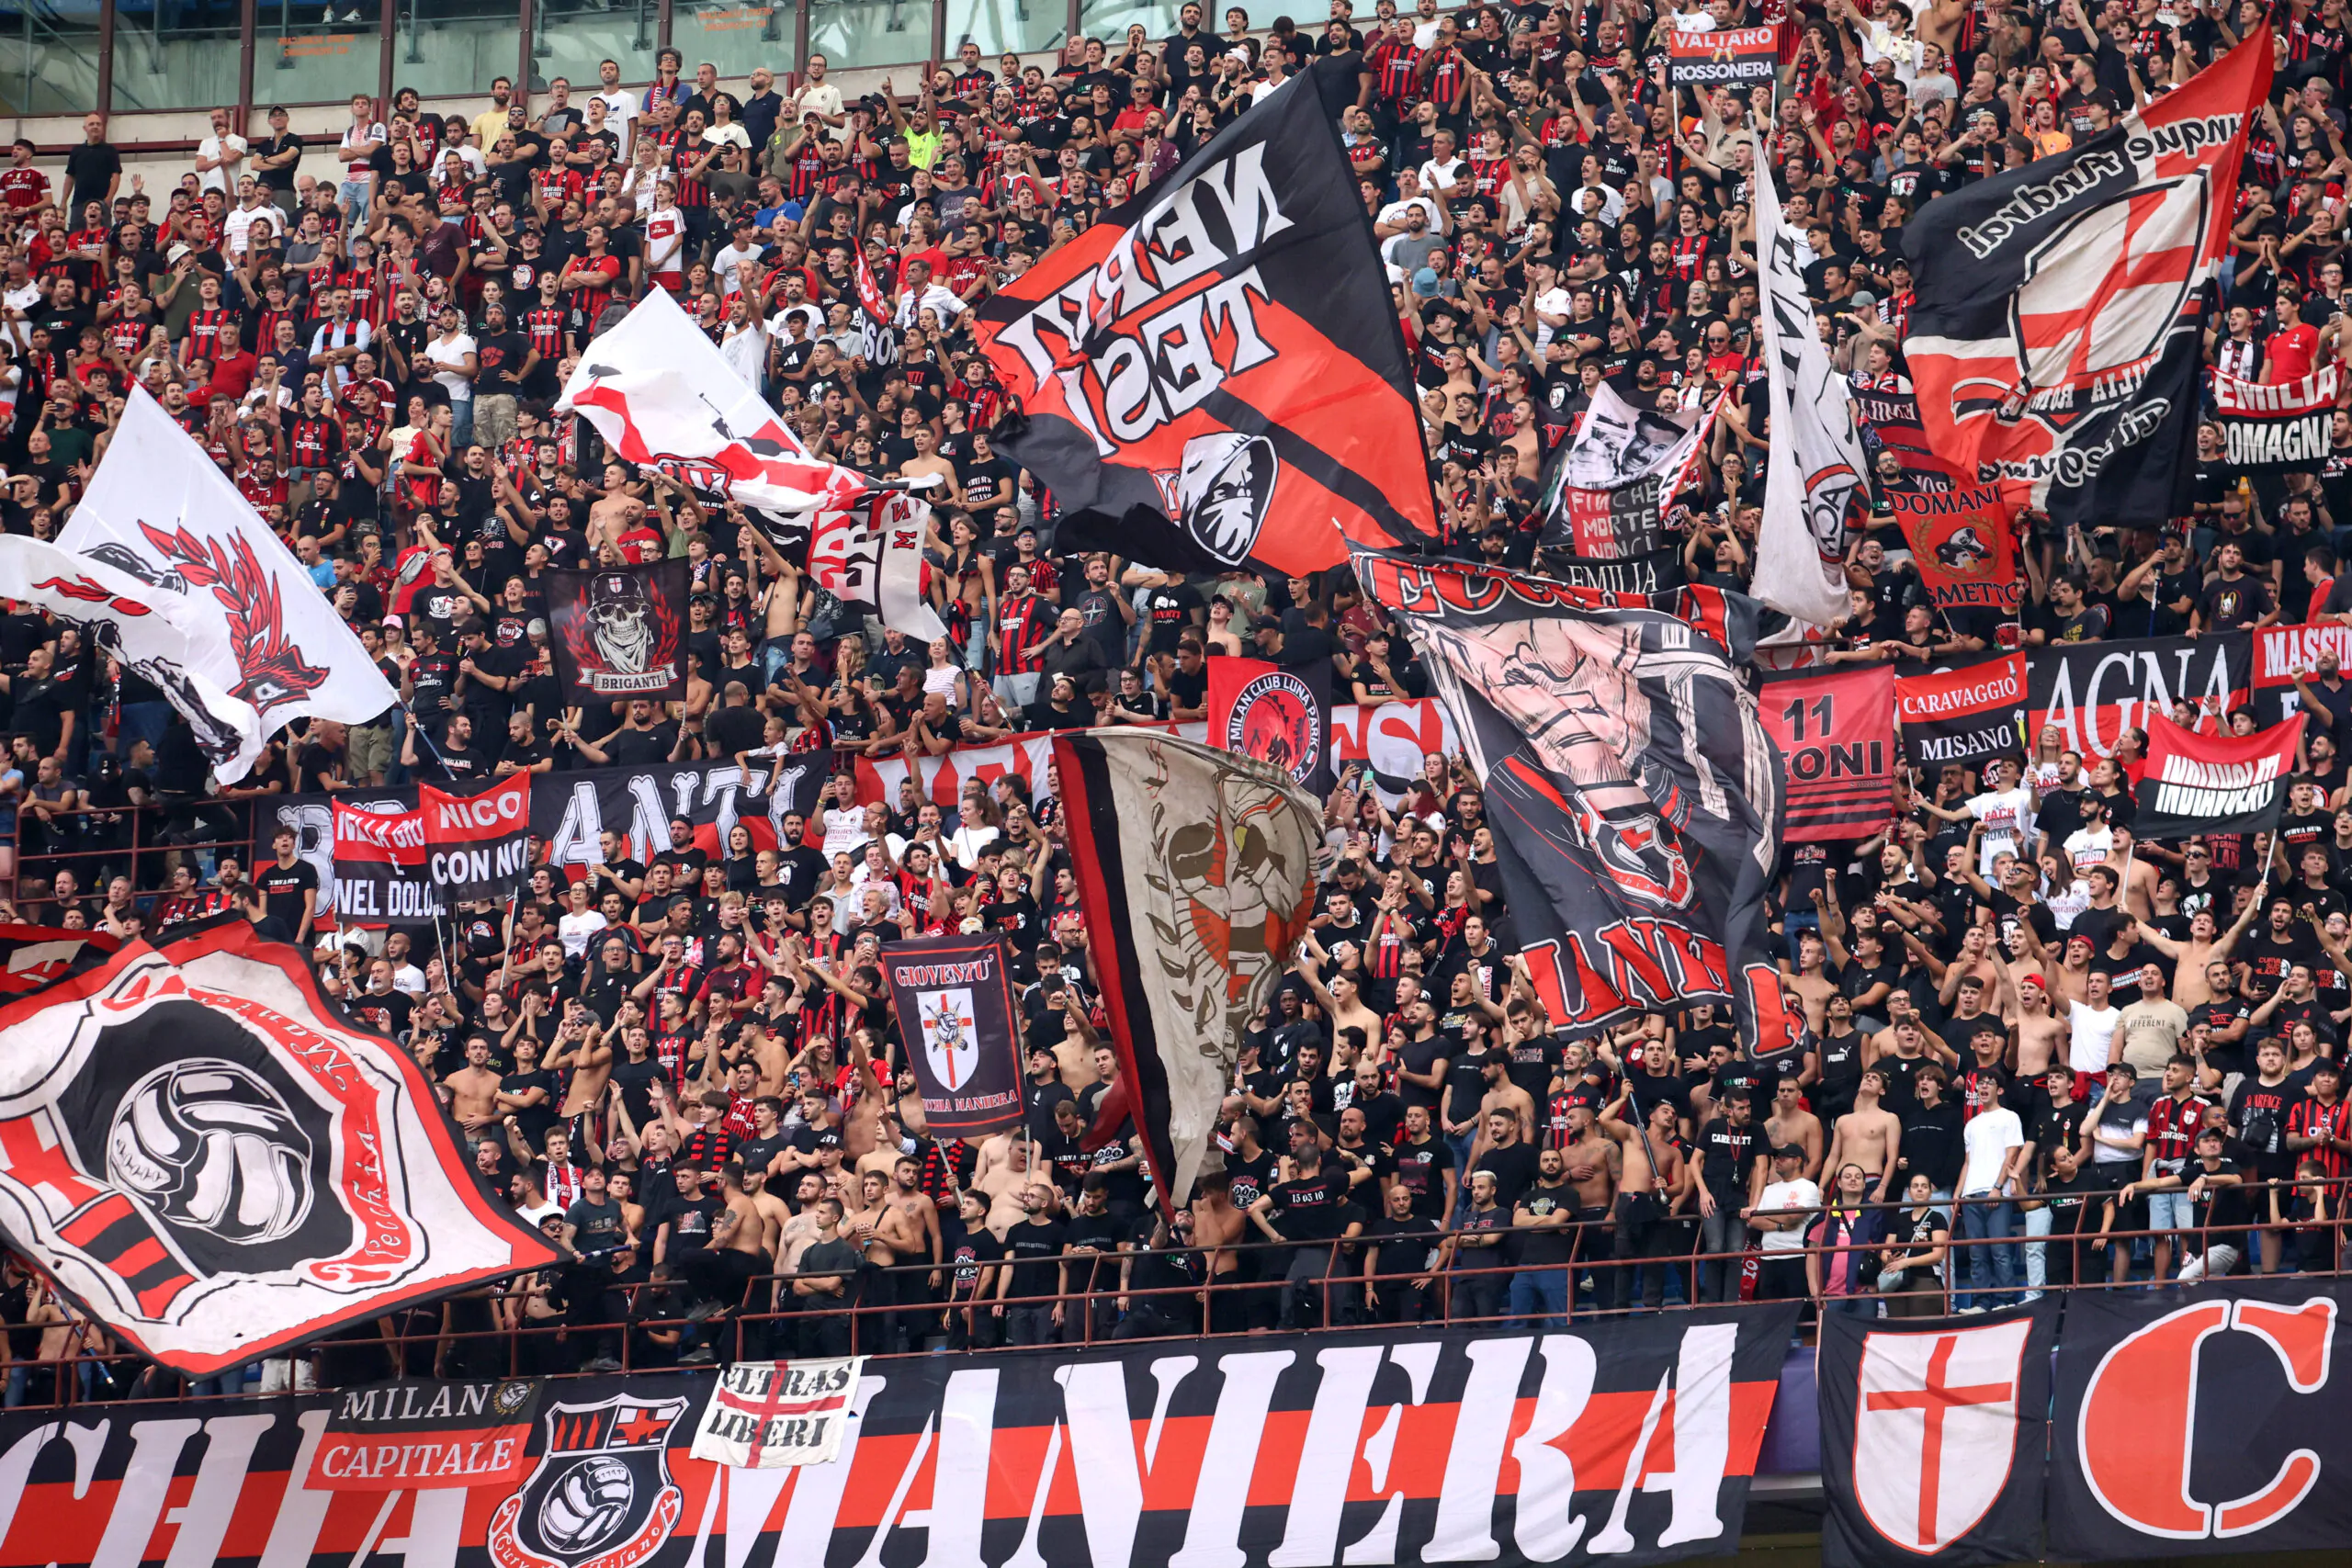 Juve-Milan, protesta della Curva Sud: i motivi